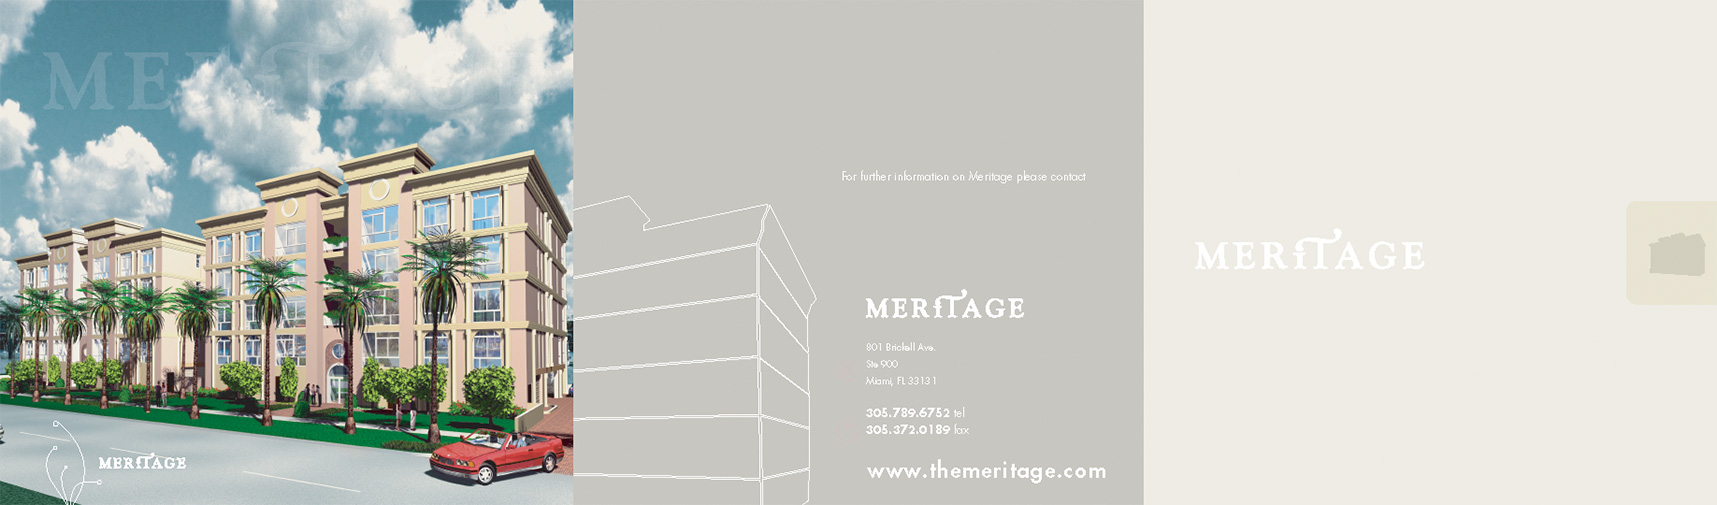 Meritage Brochure